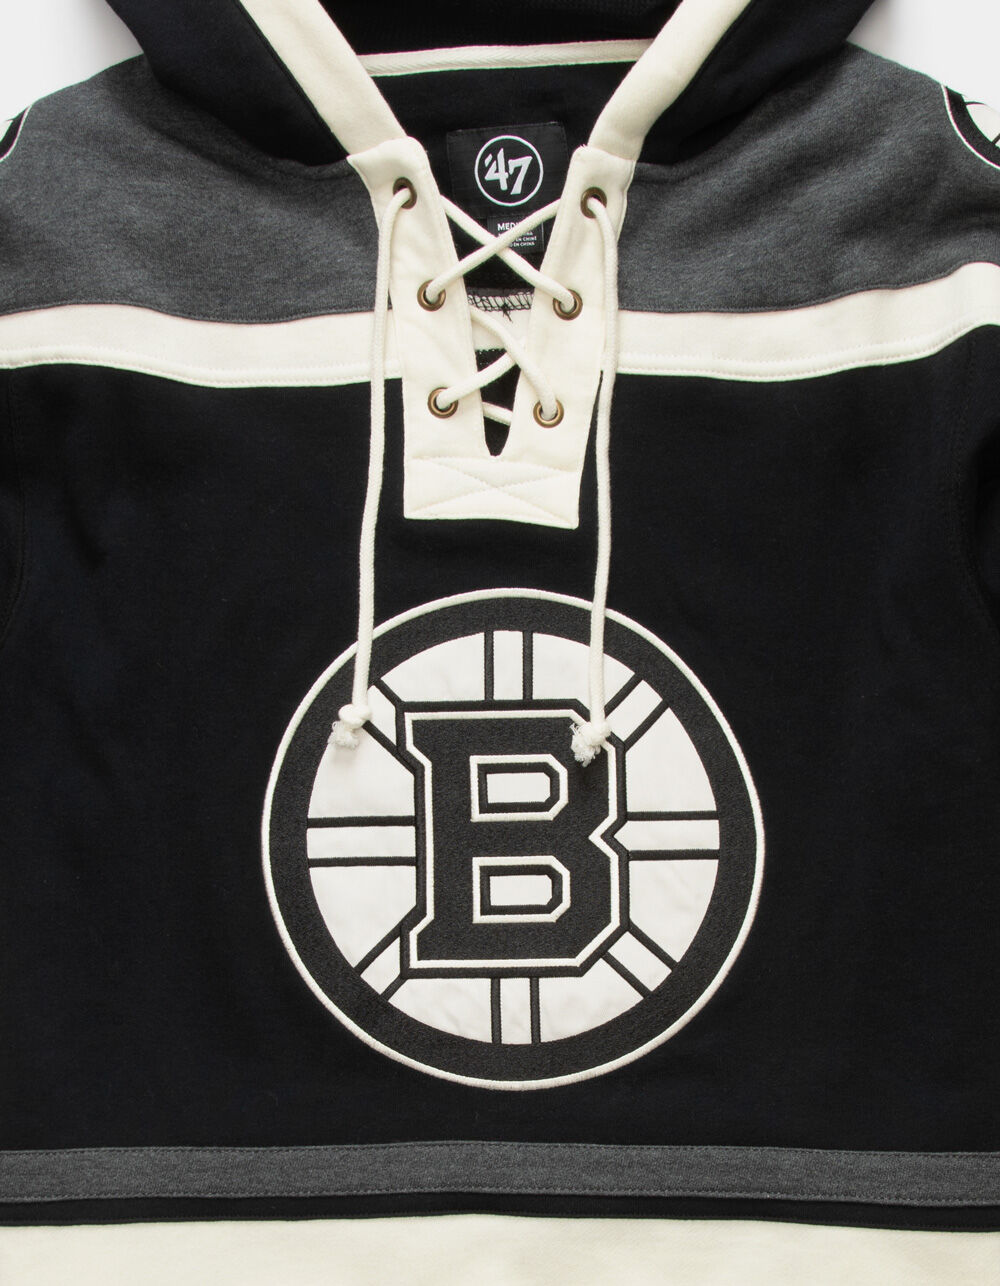 Bruins Ladies '47 Centennial Bennett Pullover Hood (S) | Boston ProShop